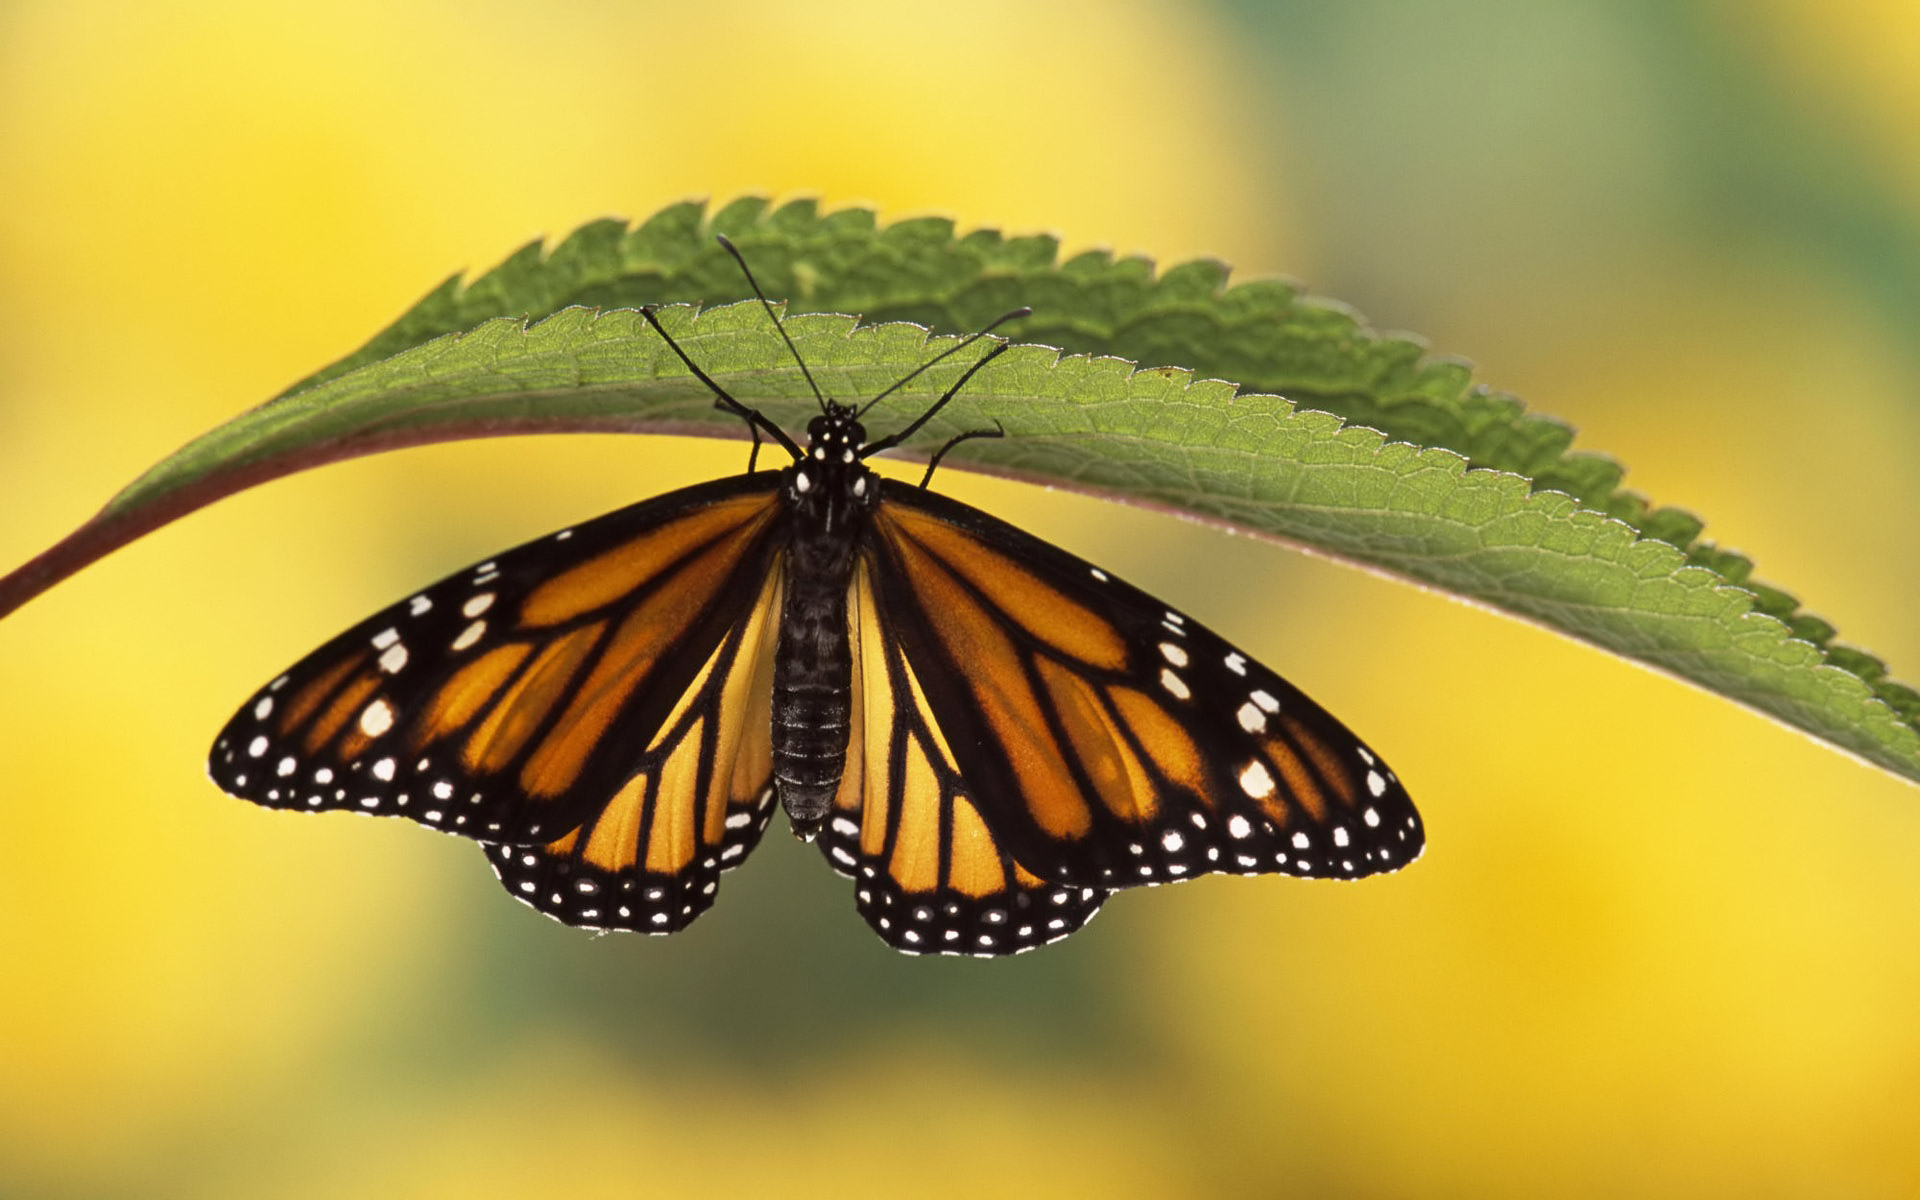 fondo de pantalla de mariposa gratis,polillas y mariposas,mariposa,mariposa monarca,insecto,mariposa virrey